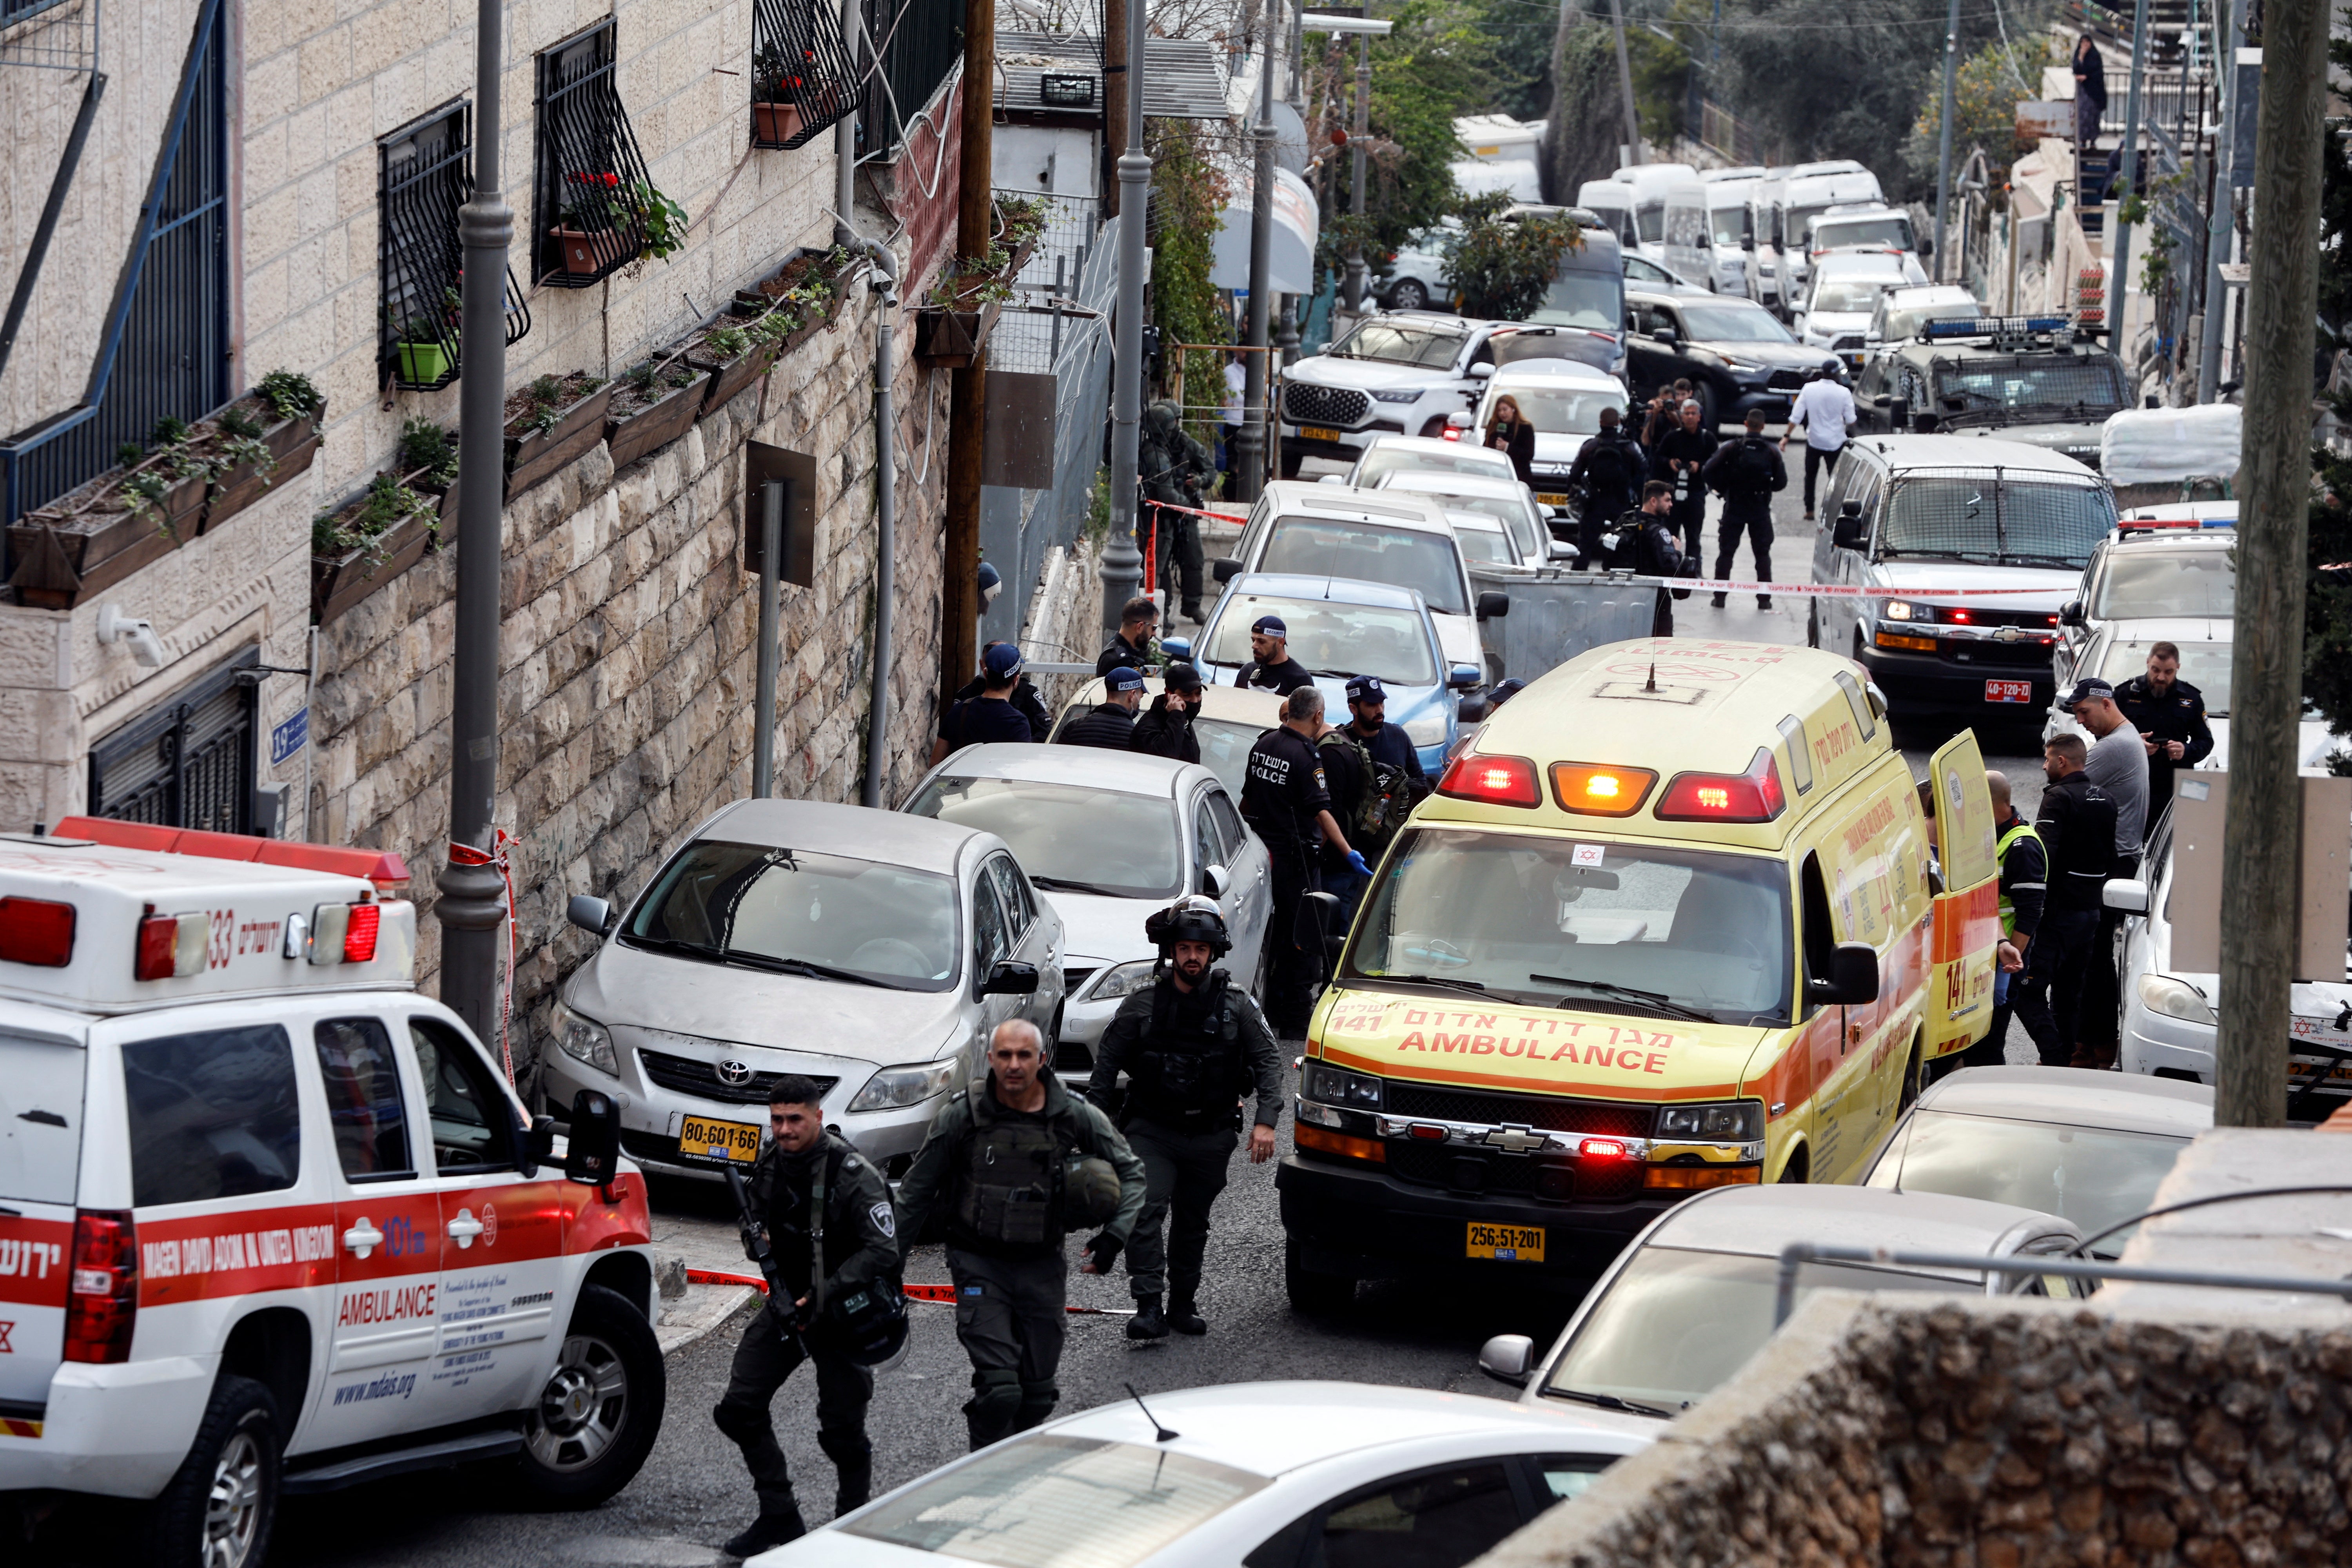 Jerusalem shooting: Alleged 13-year-old Palestinian gunman apprehended by armed Israeli citizen